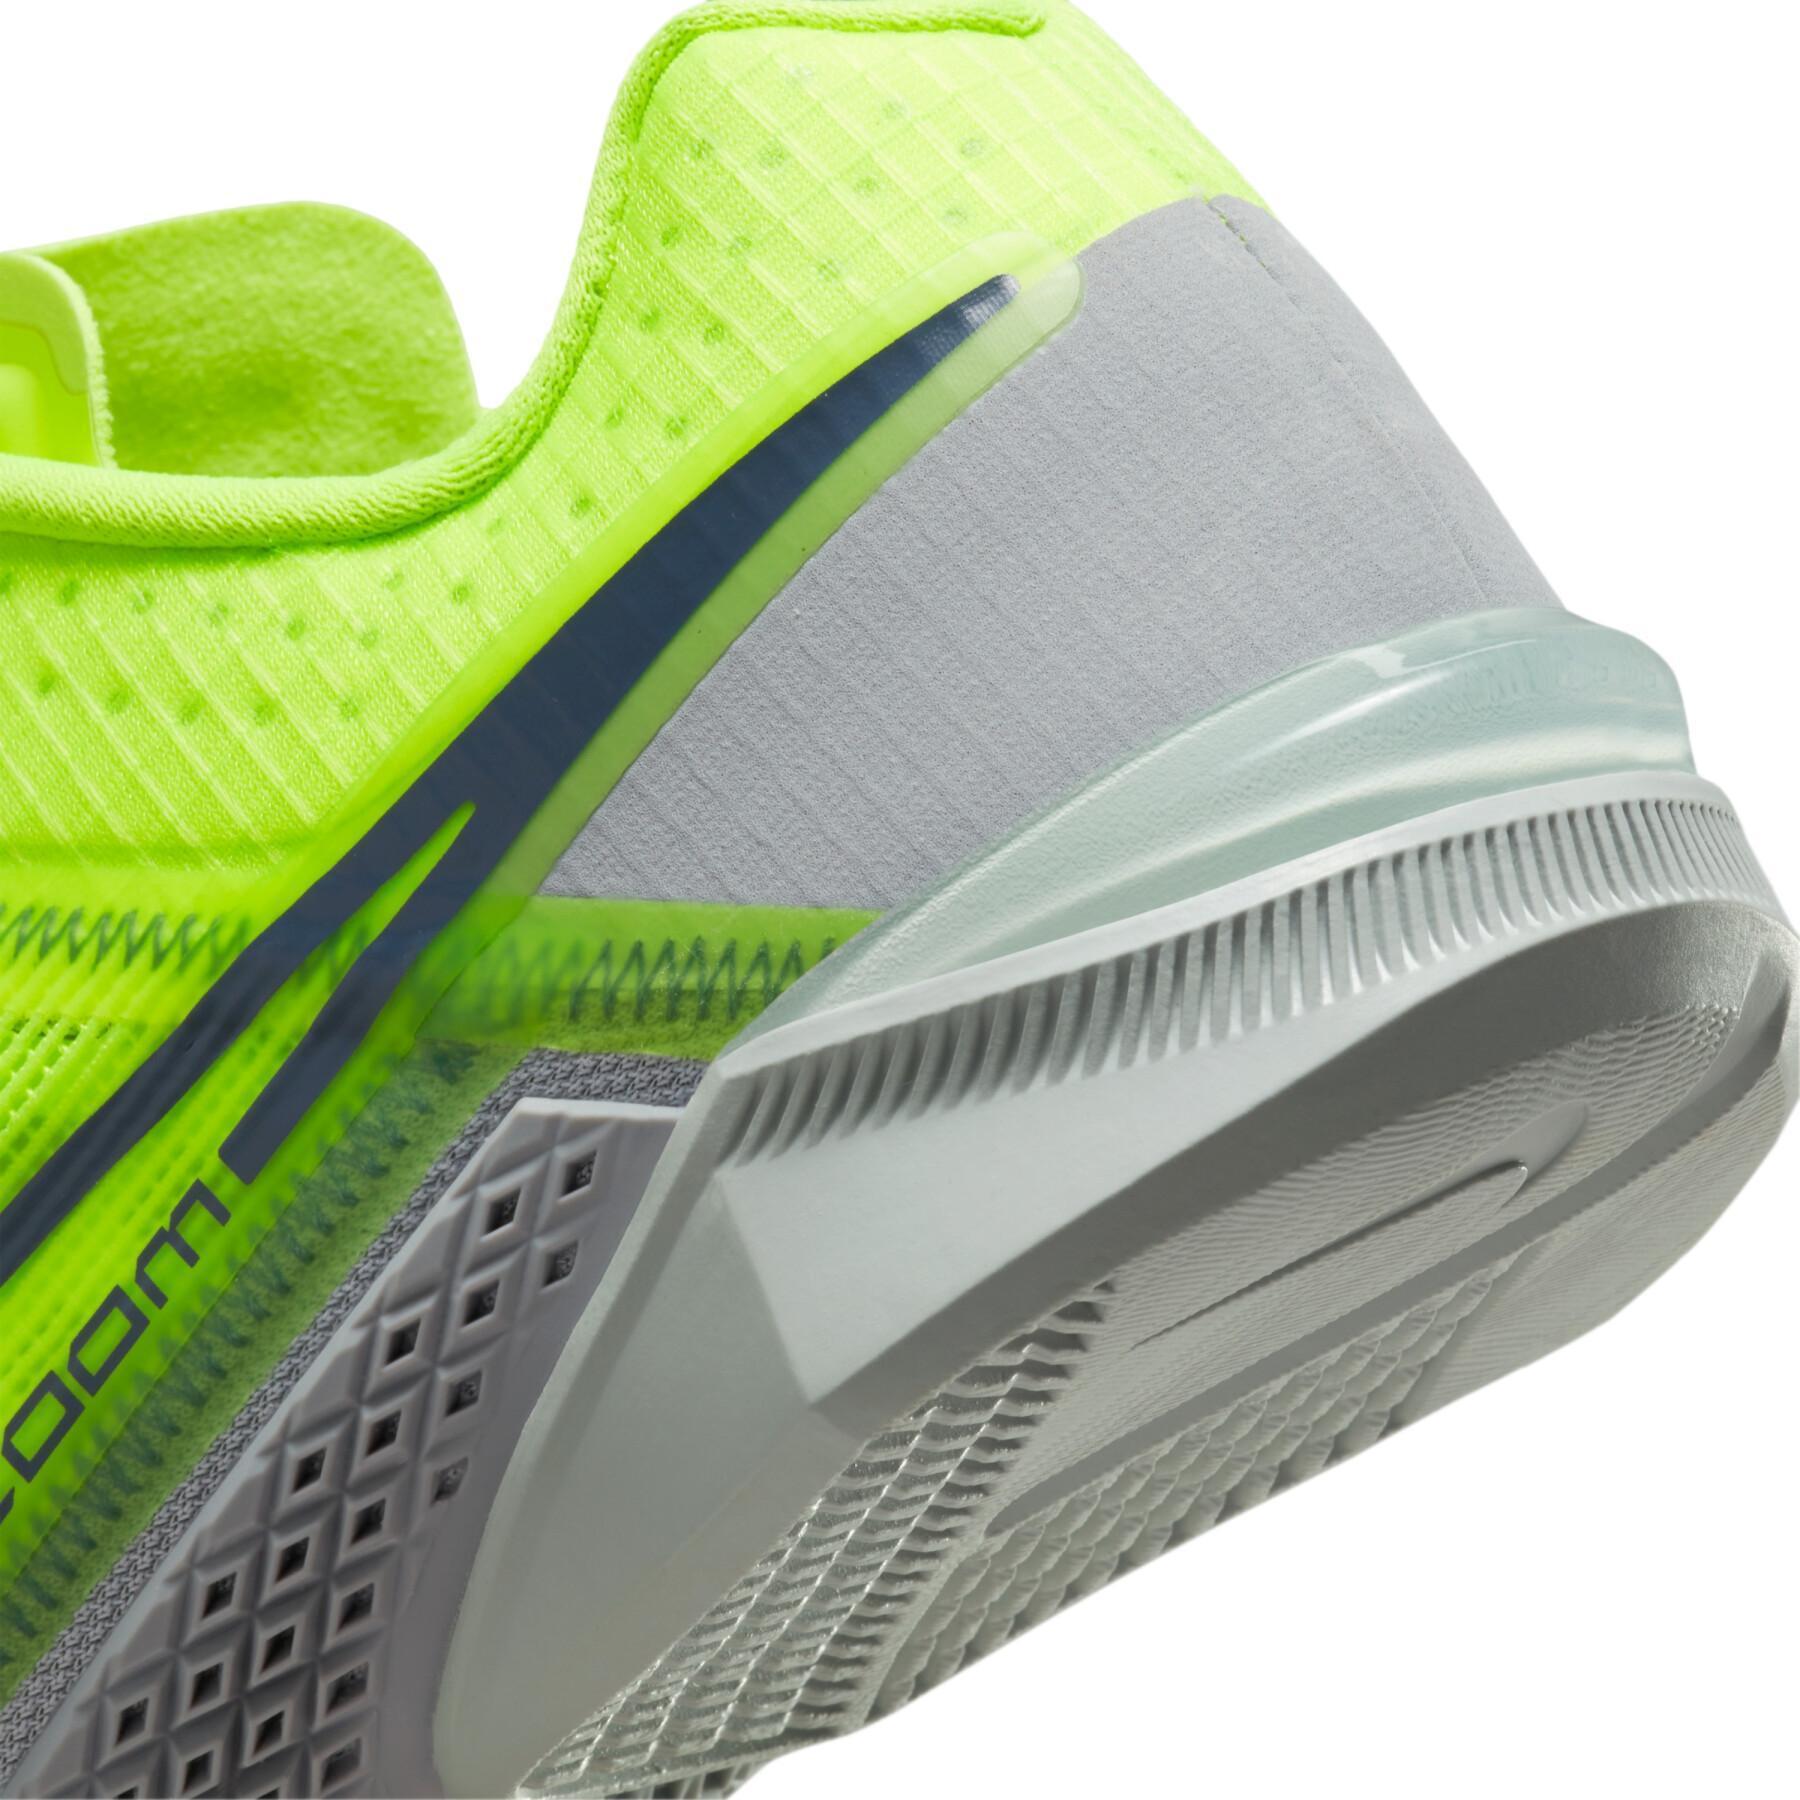 Shoes indoor Nike Zoom Metcon Turbo 2